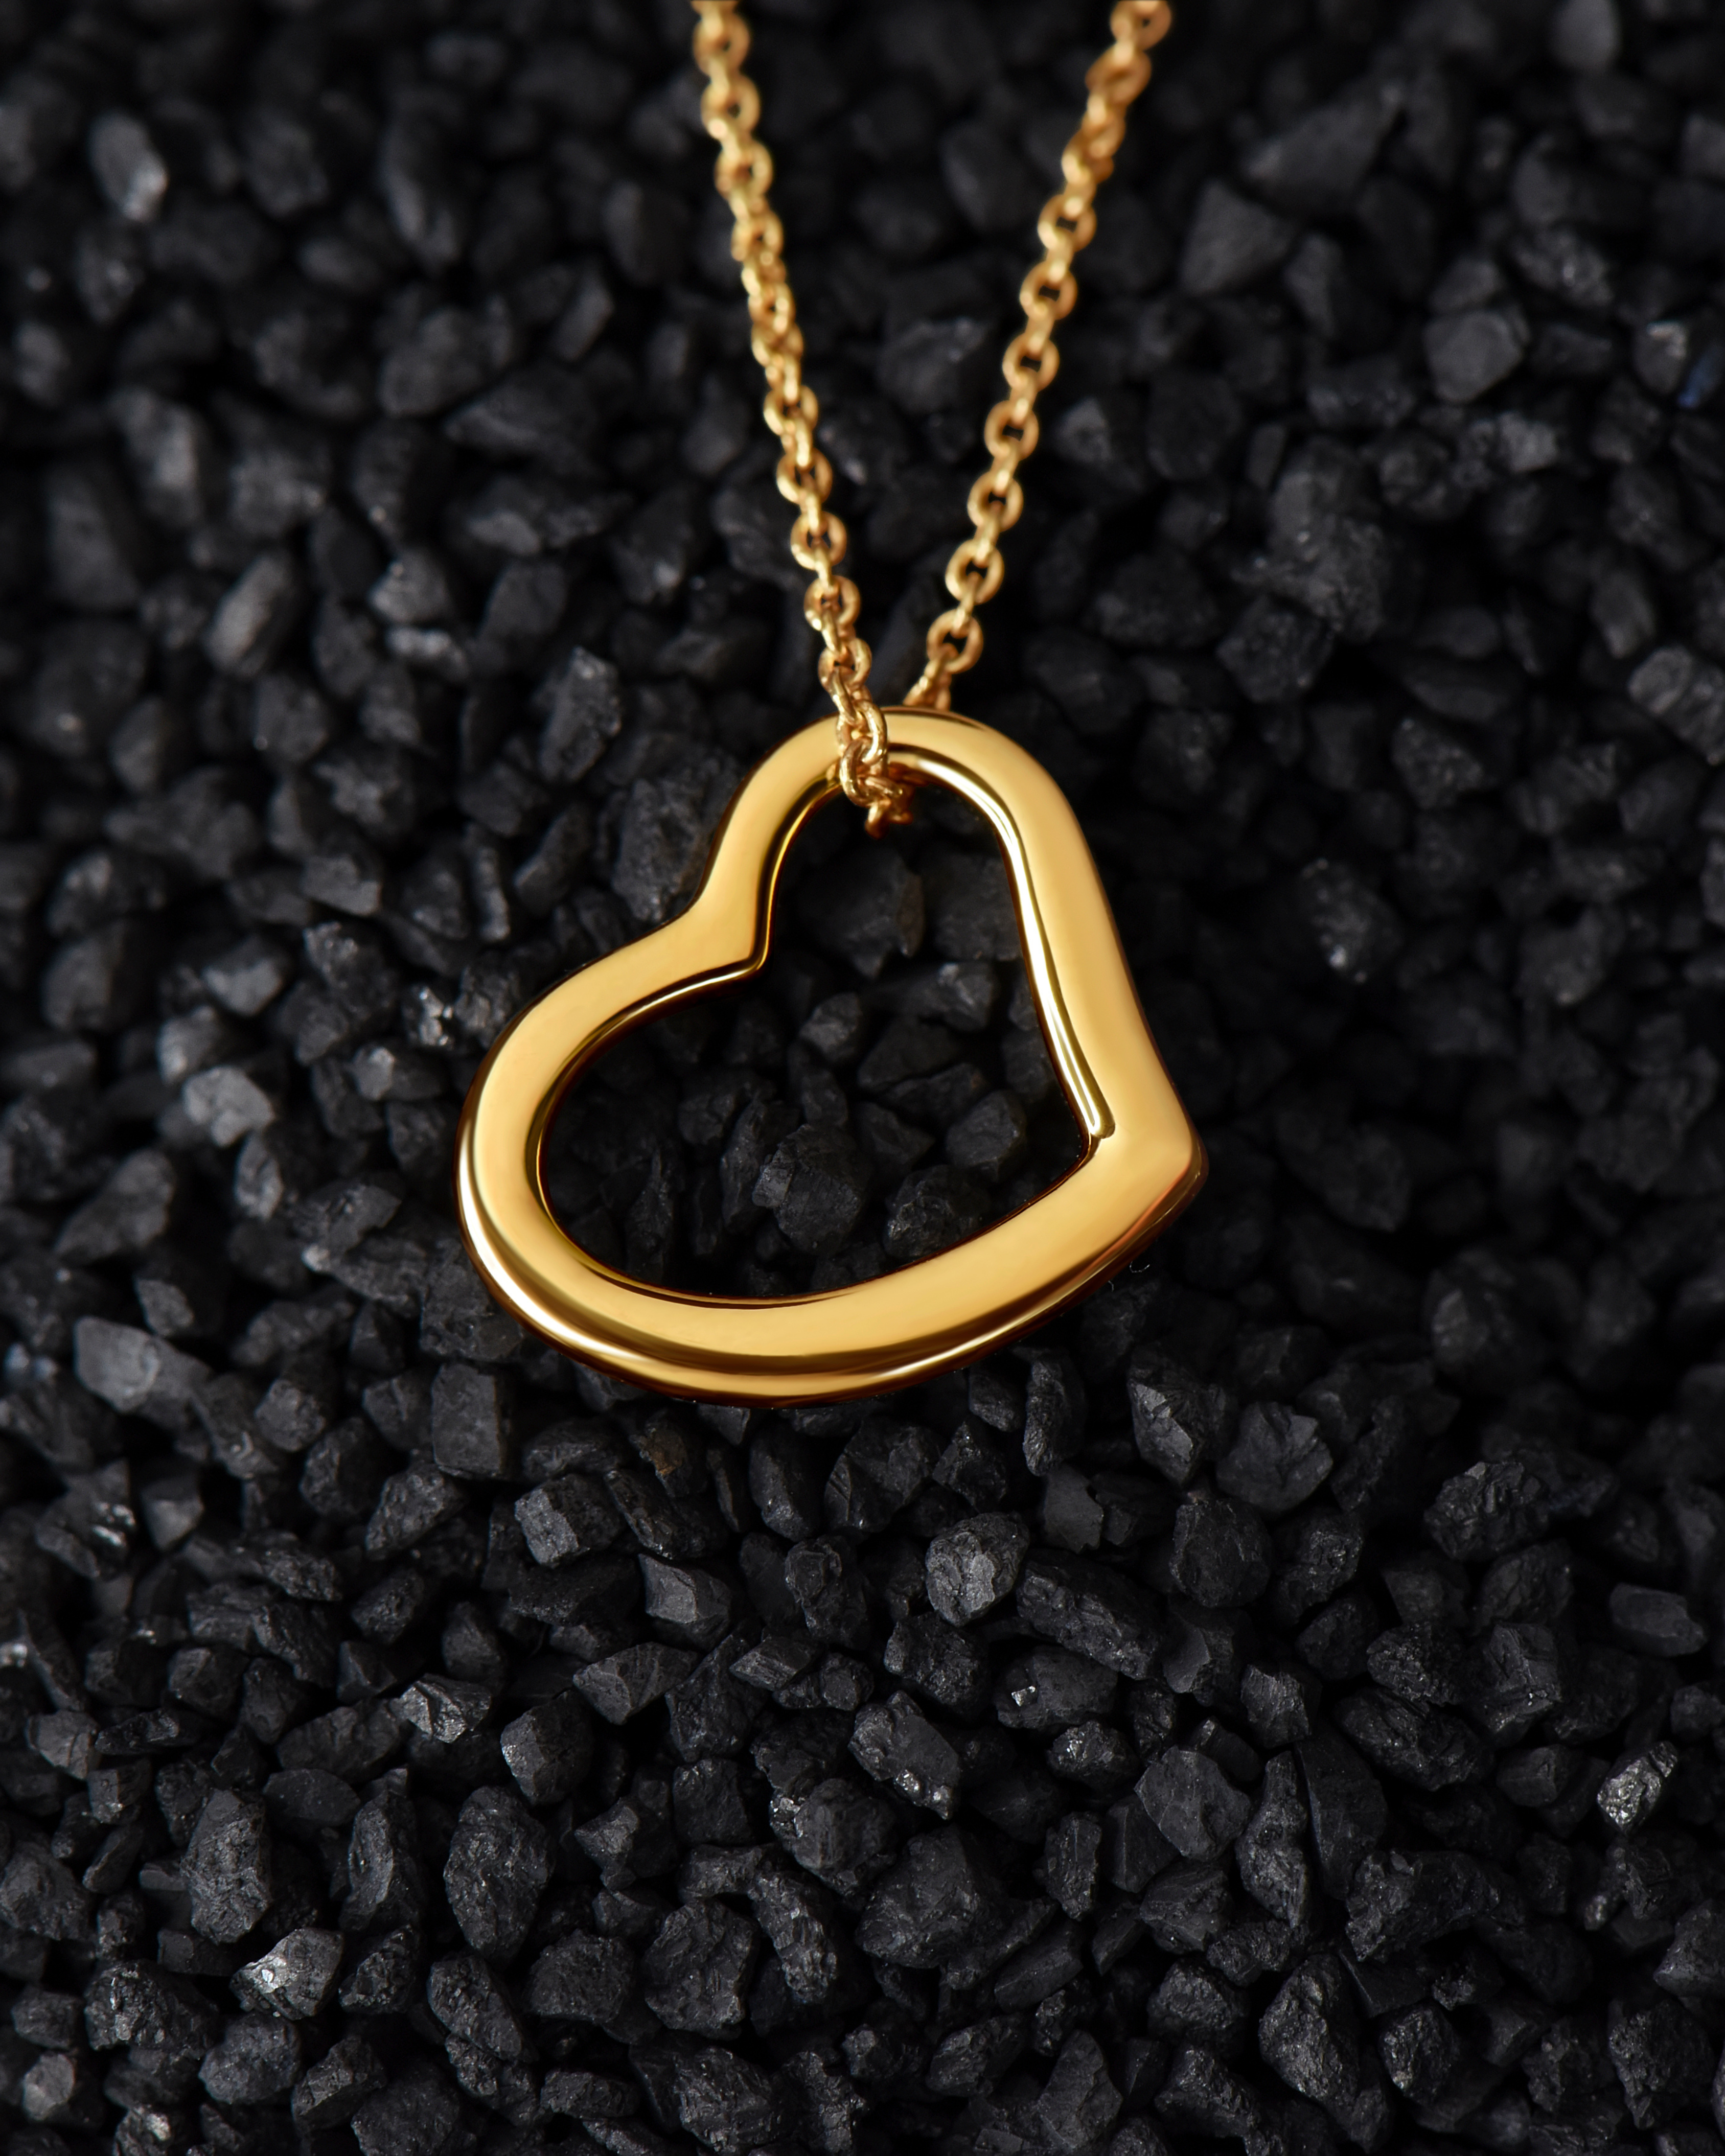 New 14K White Gold Floating Heart Pendant Beaded Chain Necklace Milor Italy  | eBay